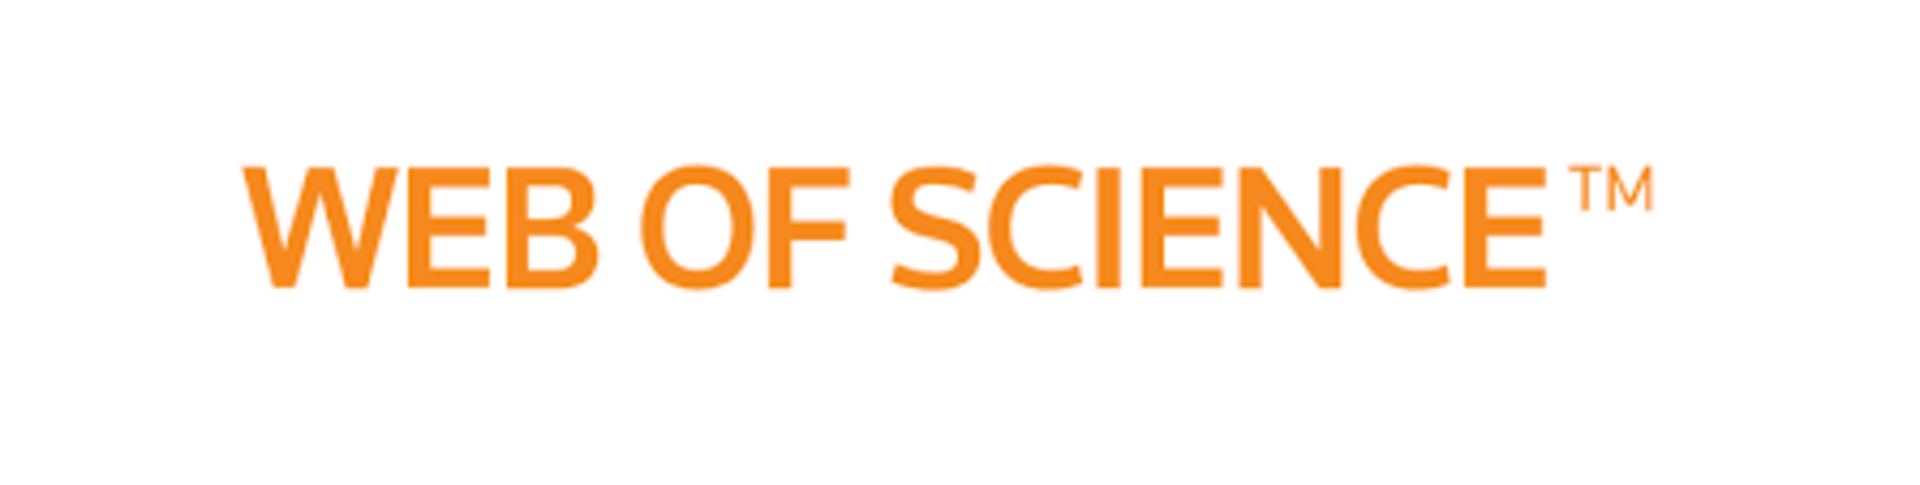 Web of science автор. Web of Science логотип. Веб оф Сайнс. Веб оф Сайнс лого. Web of Science база данных.